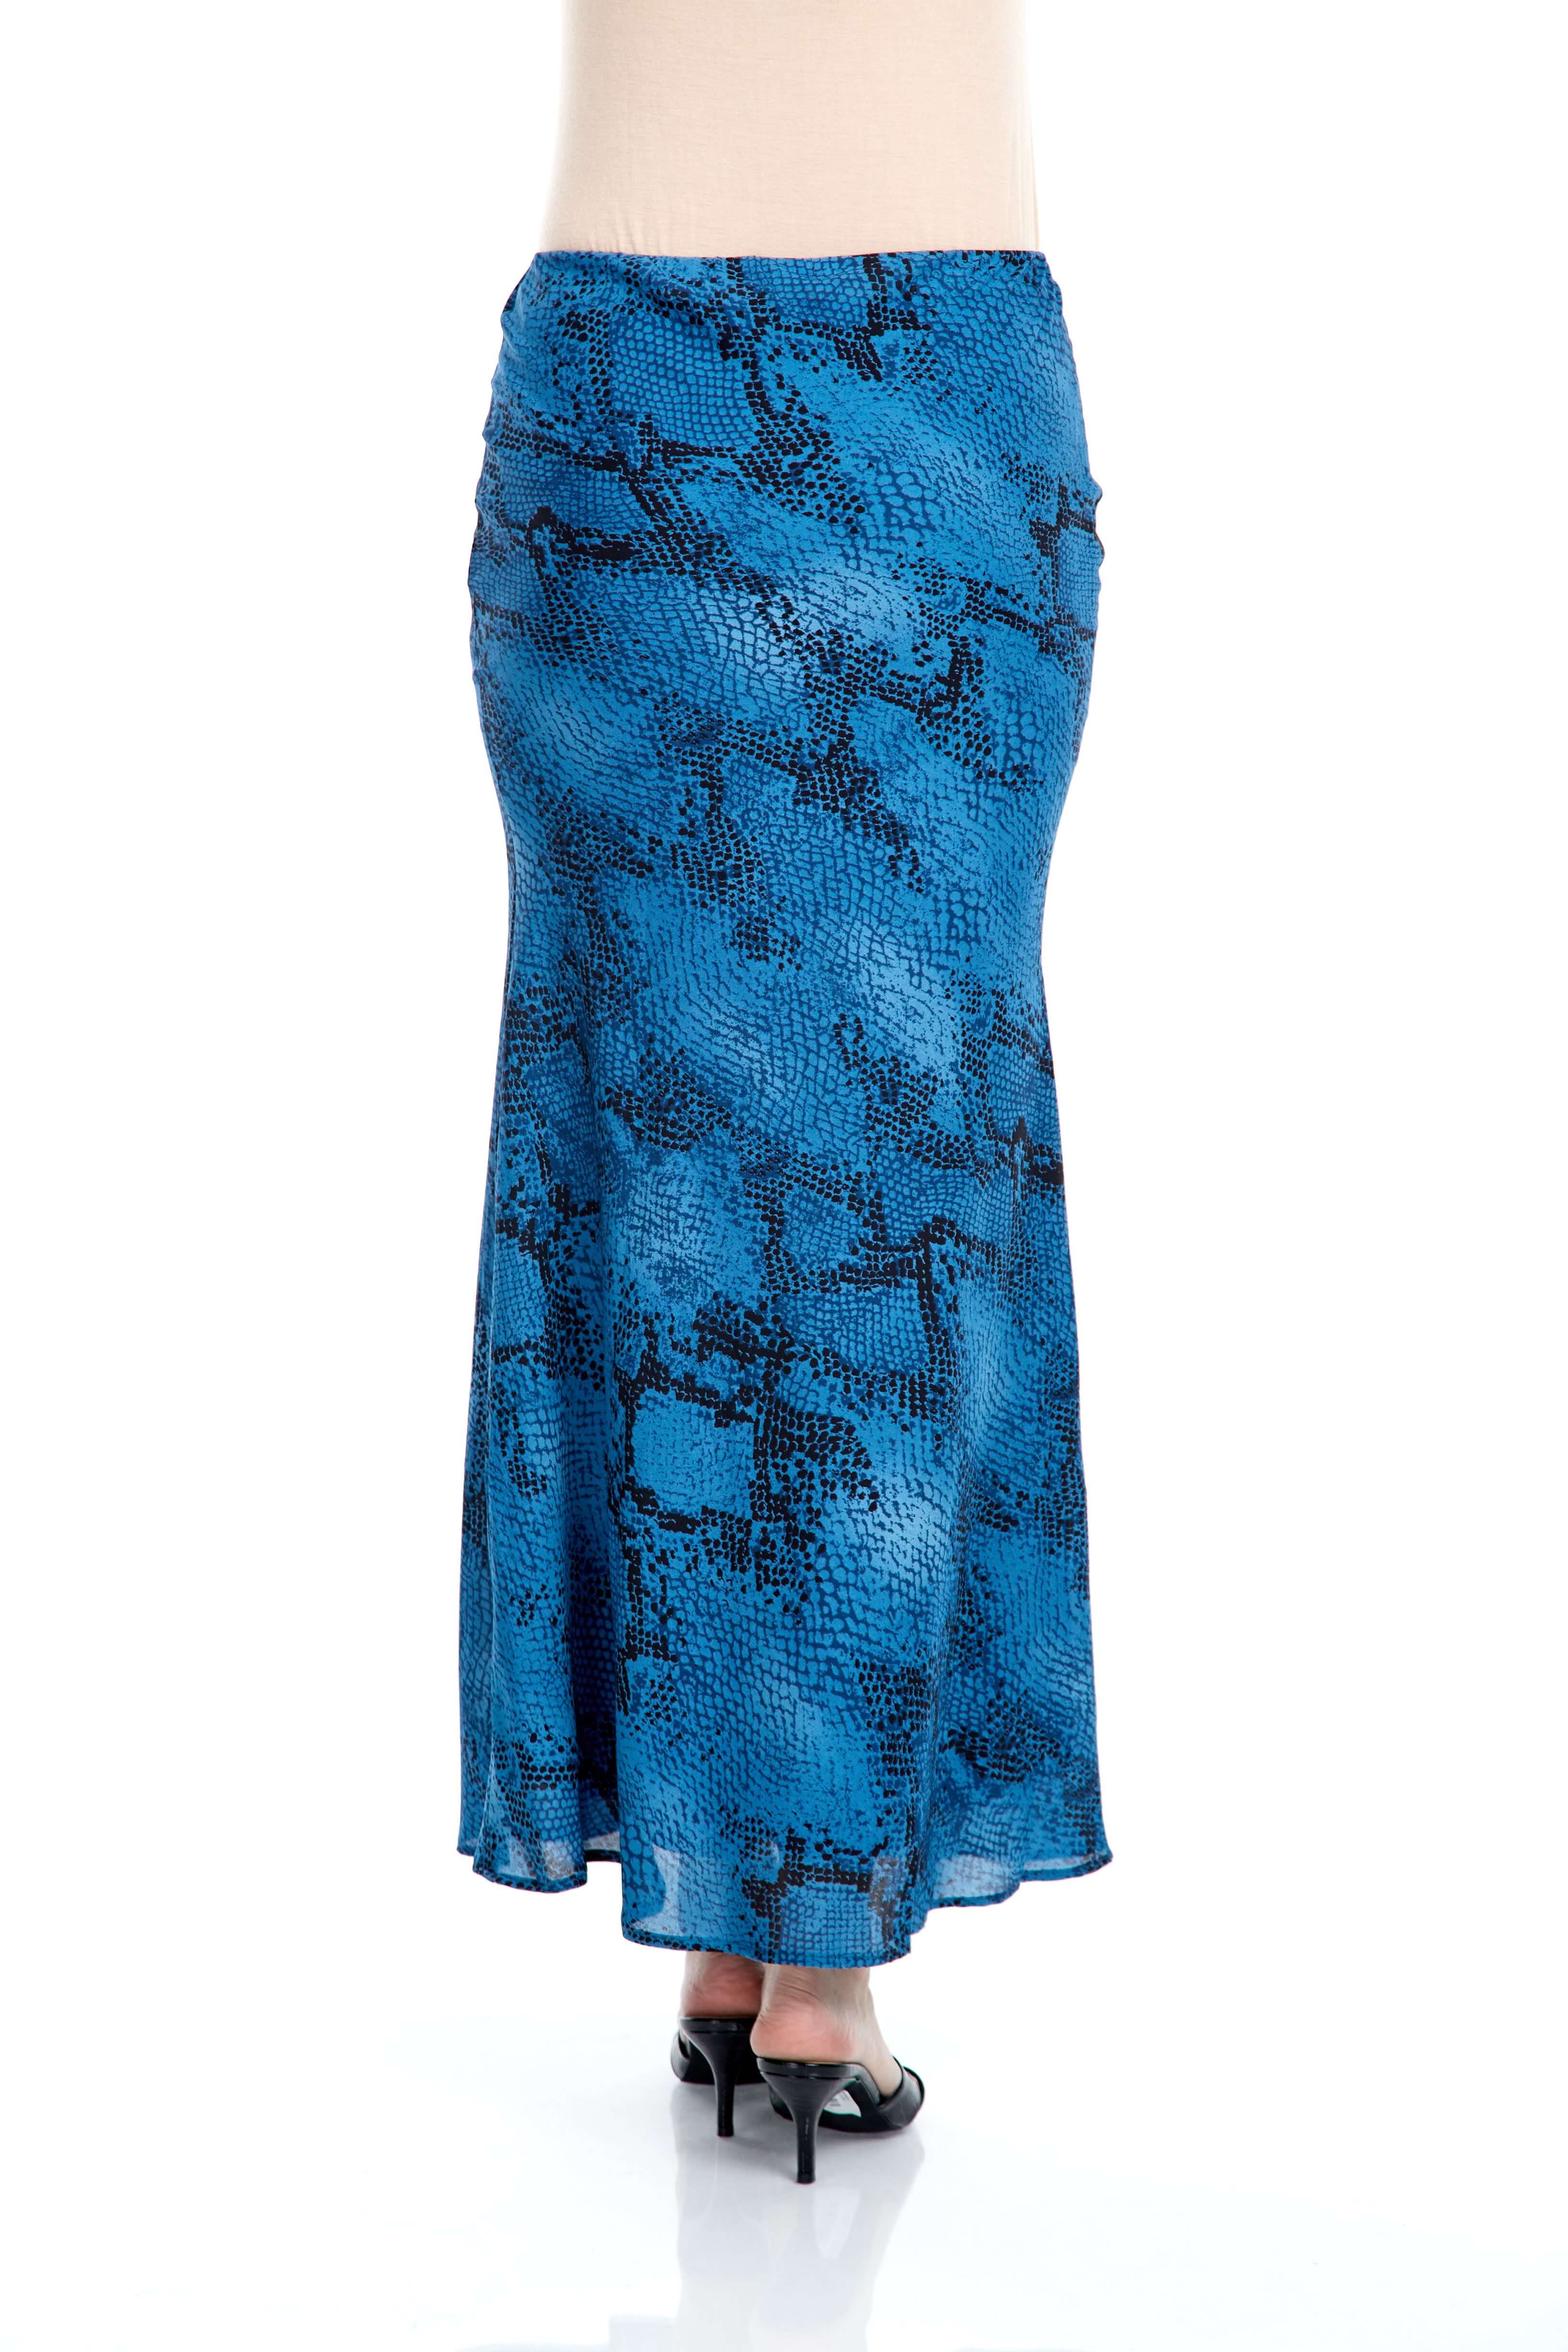 Blue Python Mermaid Skirt (3)